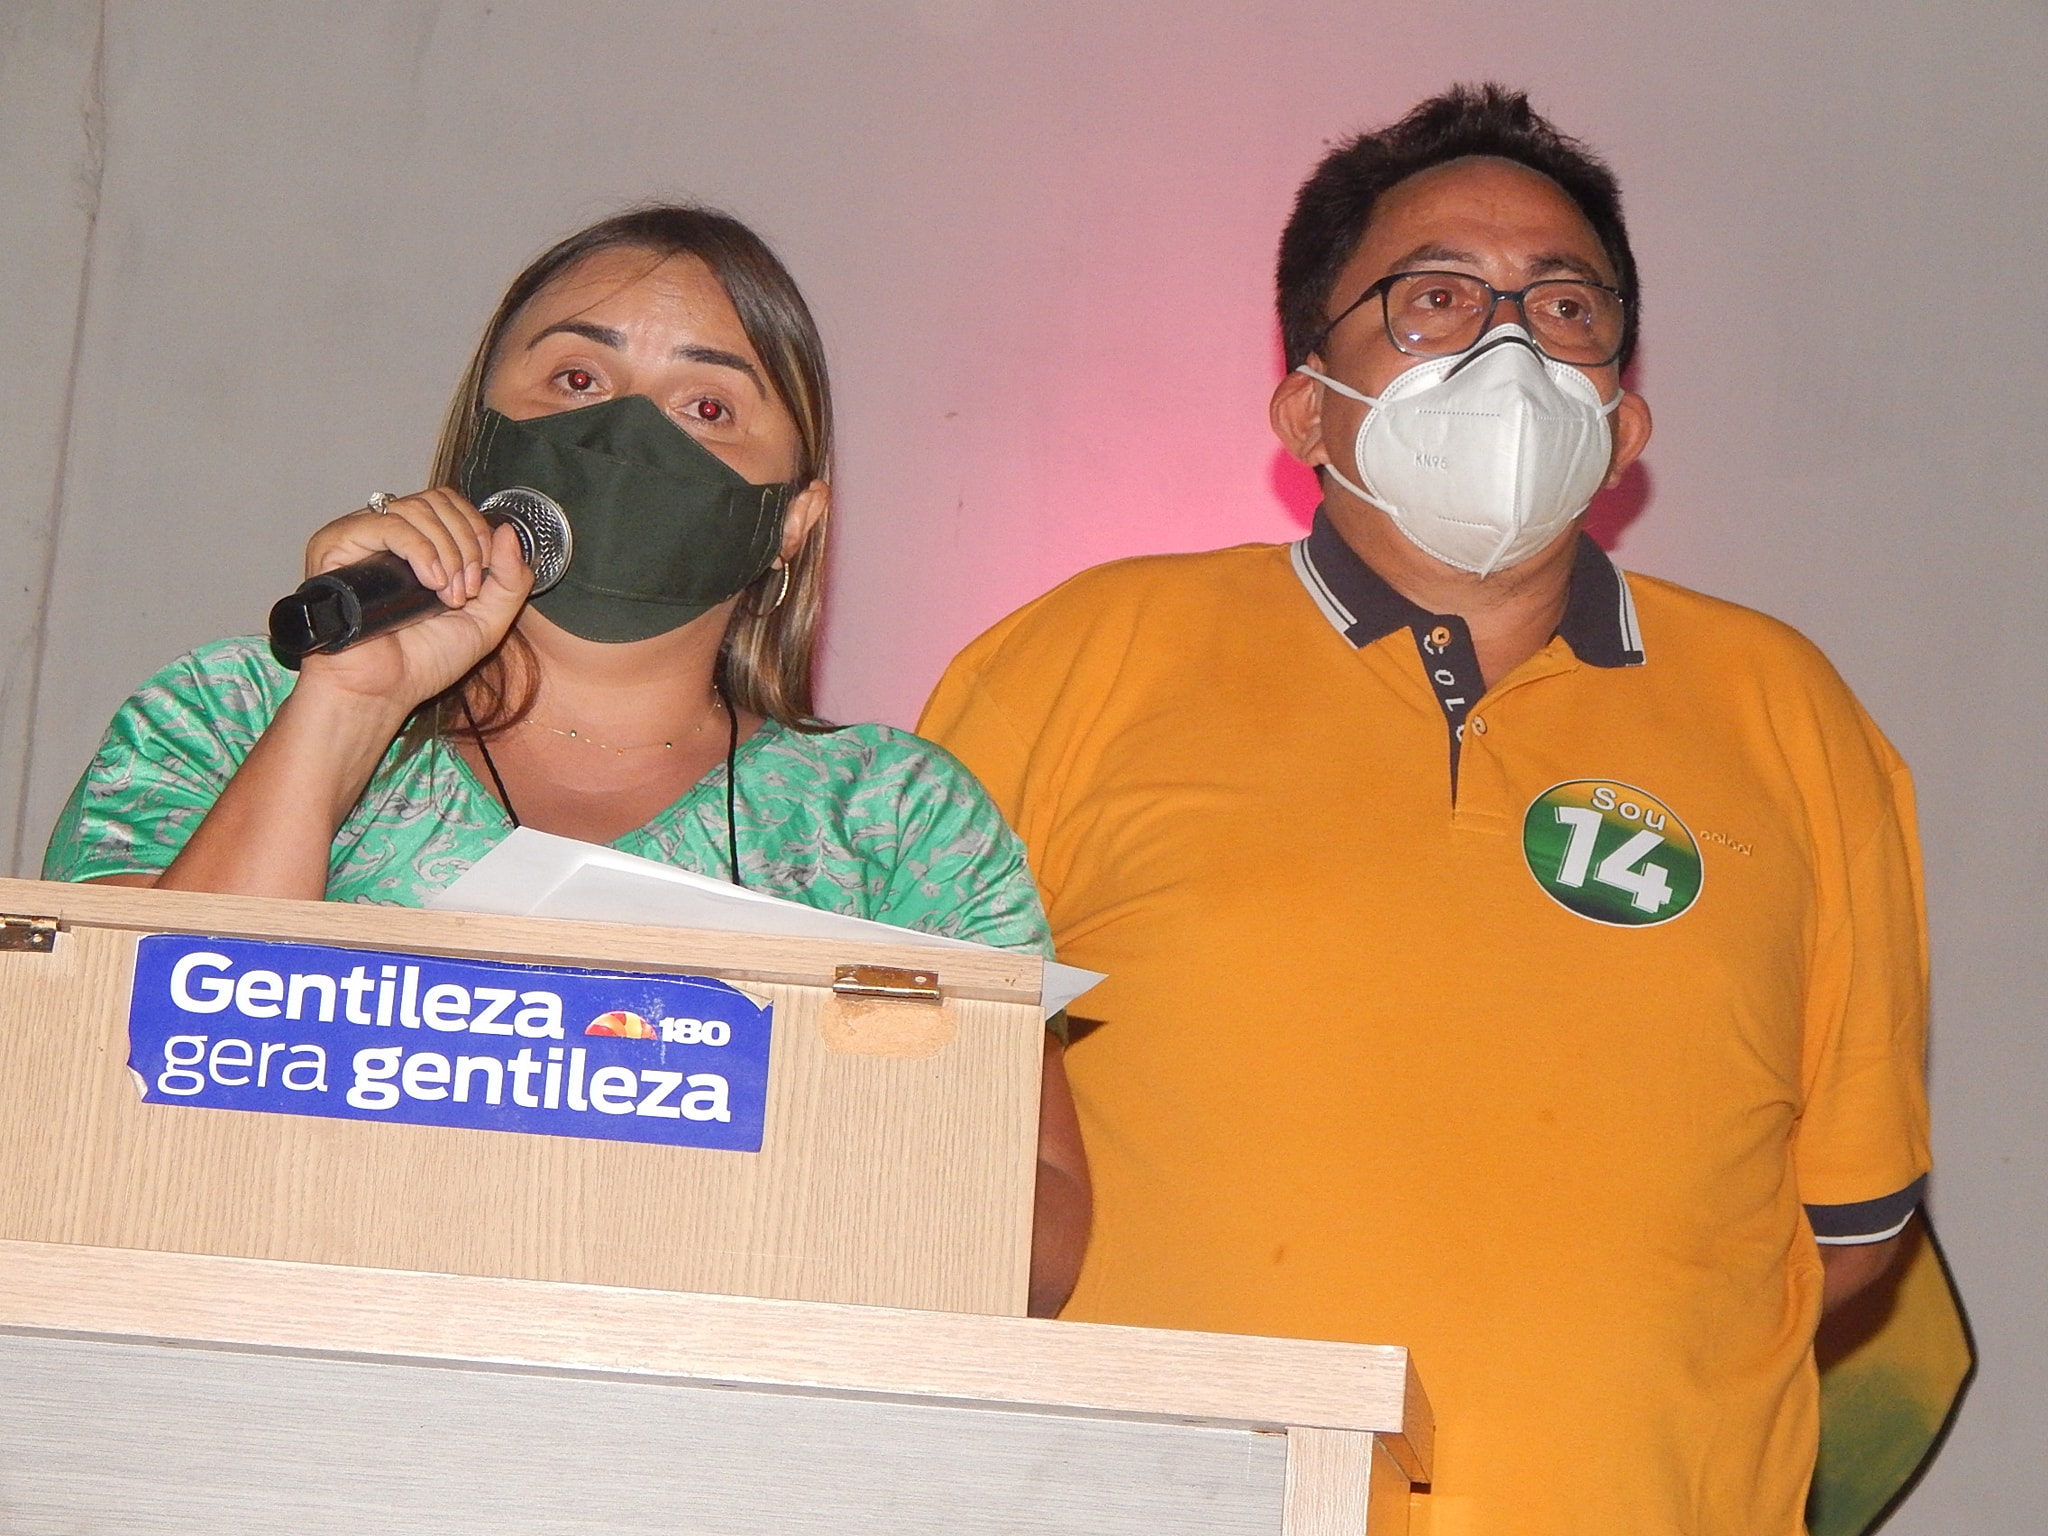 Greco prende prefeito de Agricolândia e esposa com mercadorias para aliciar eleitores